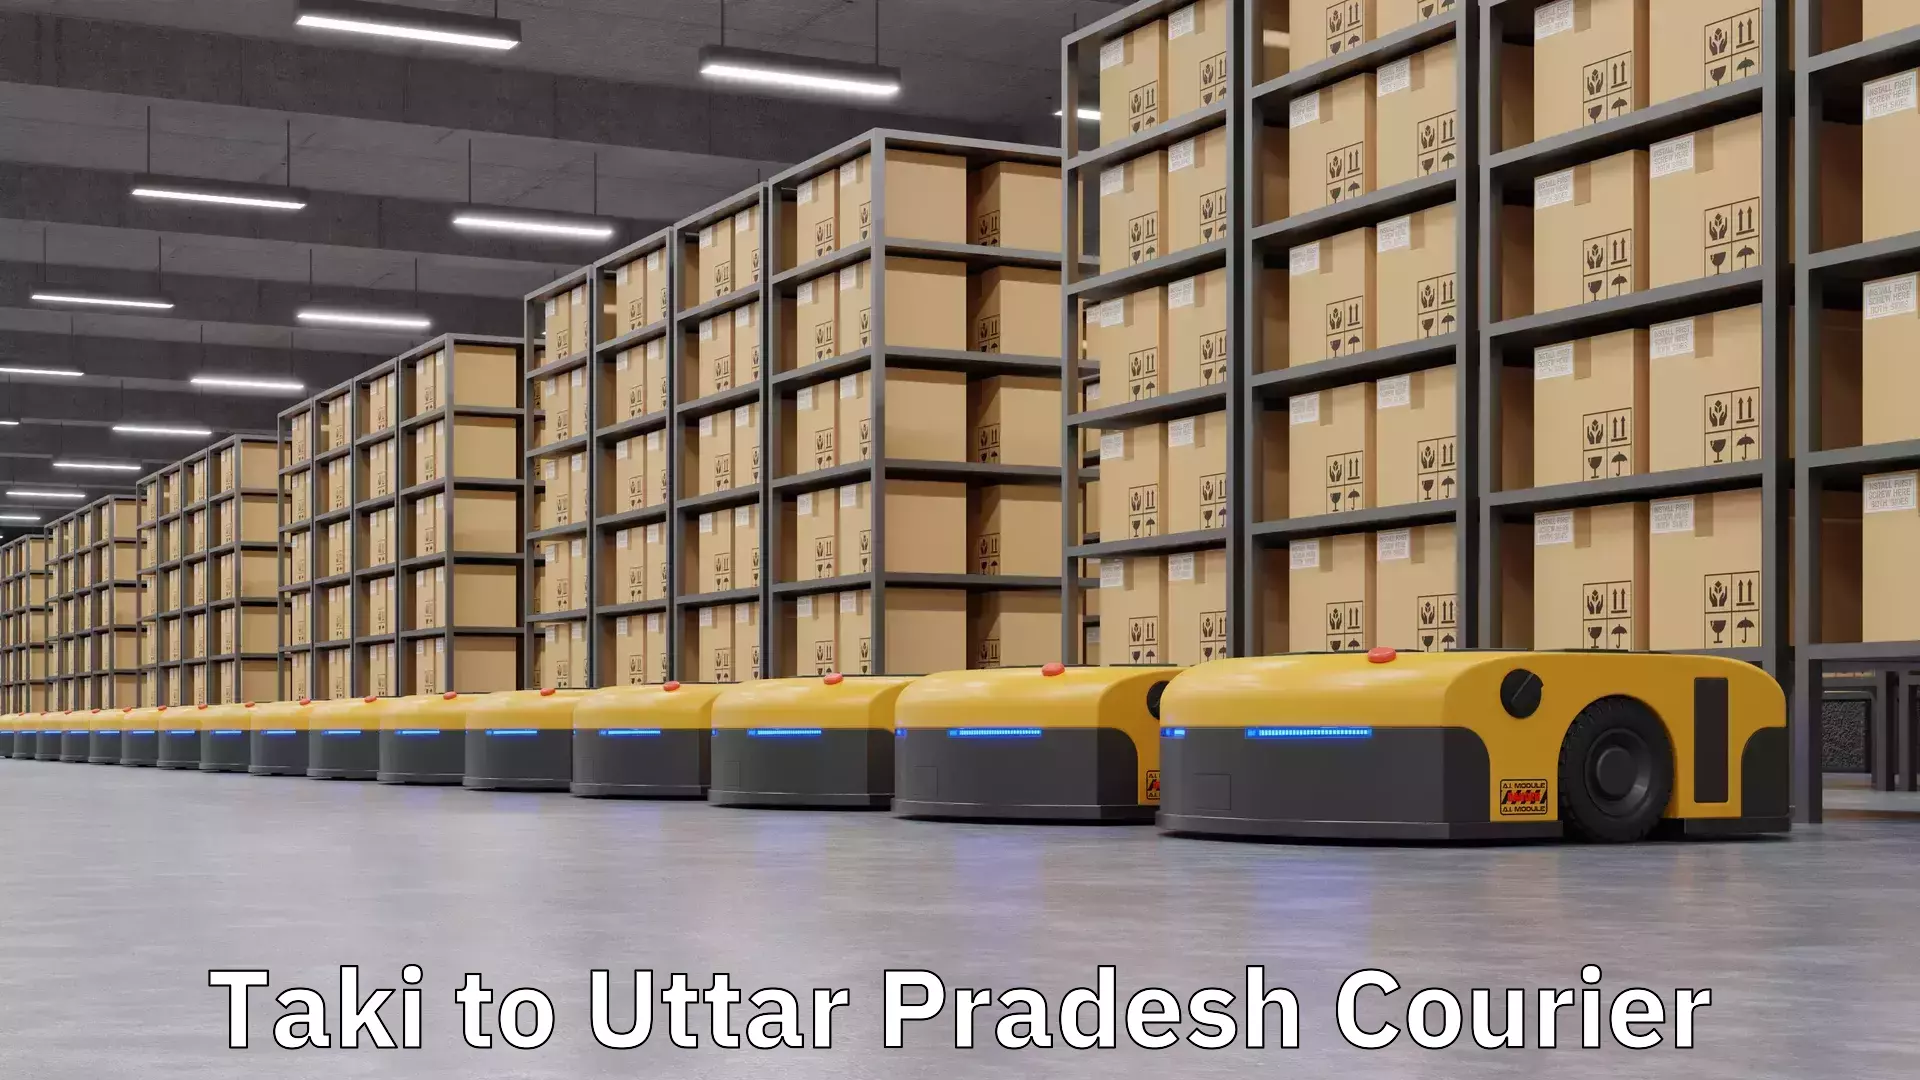 High-efficiency logistics in Taki to Uttar Pradesh